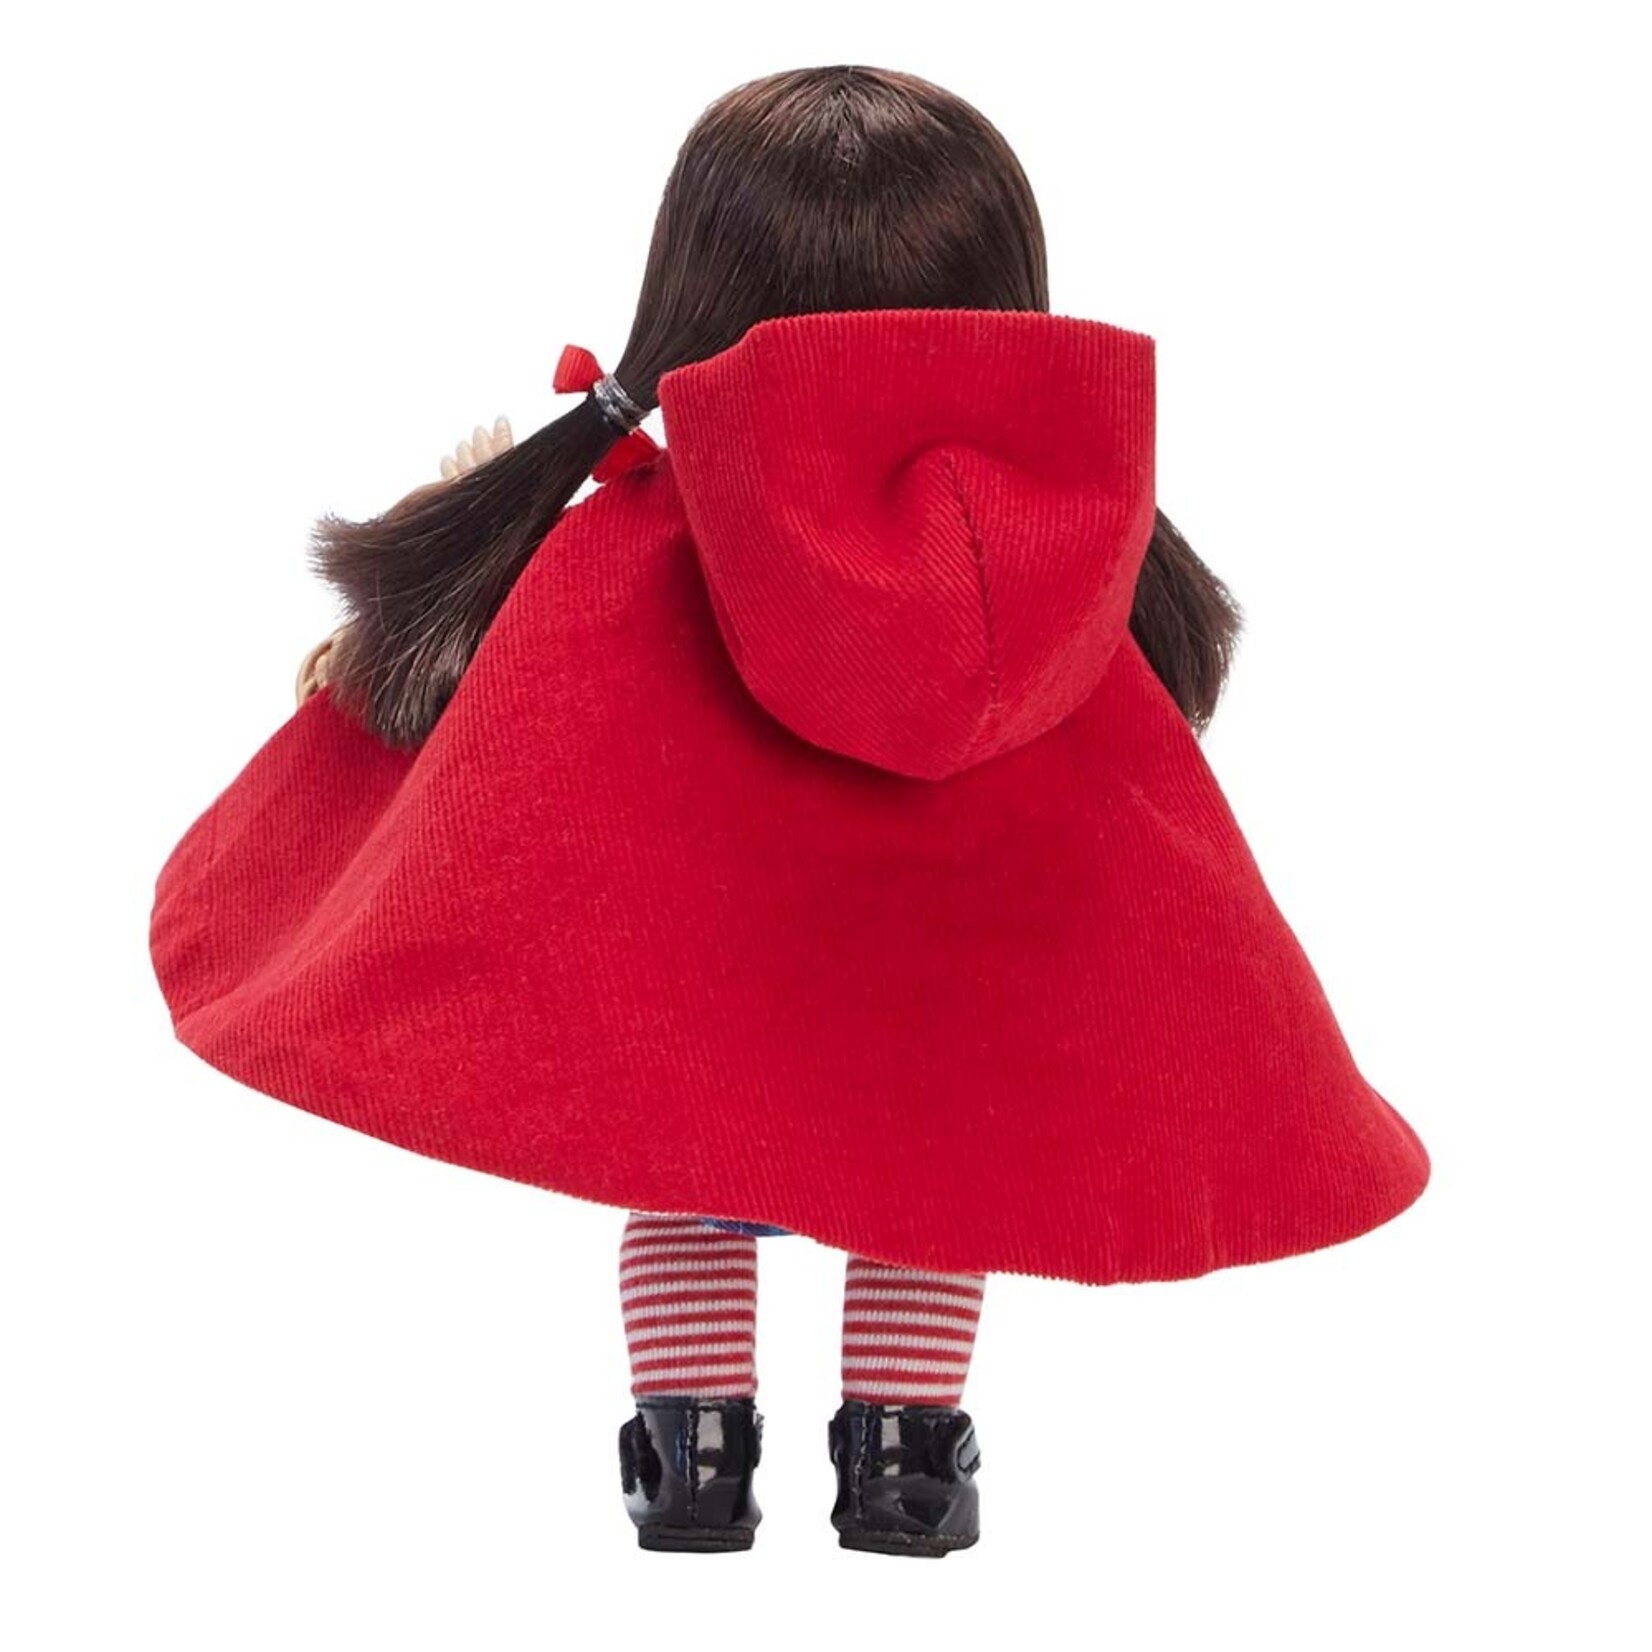 Madame Alexander Red Riding Hood 8"